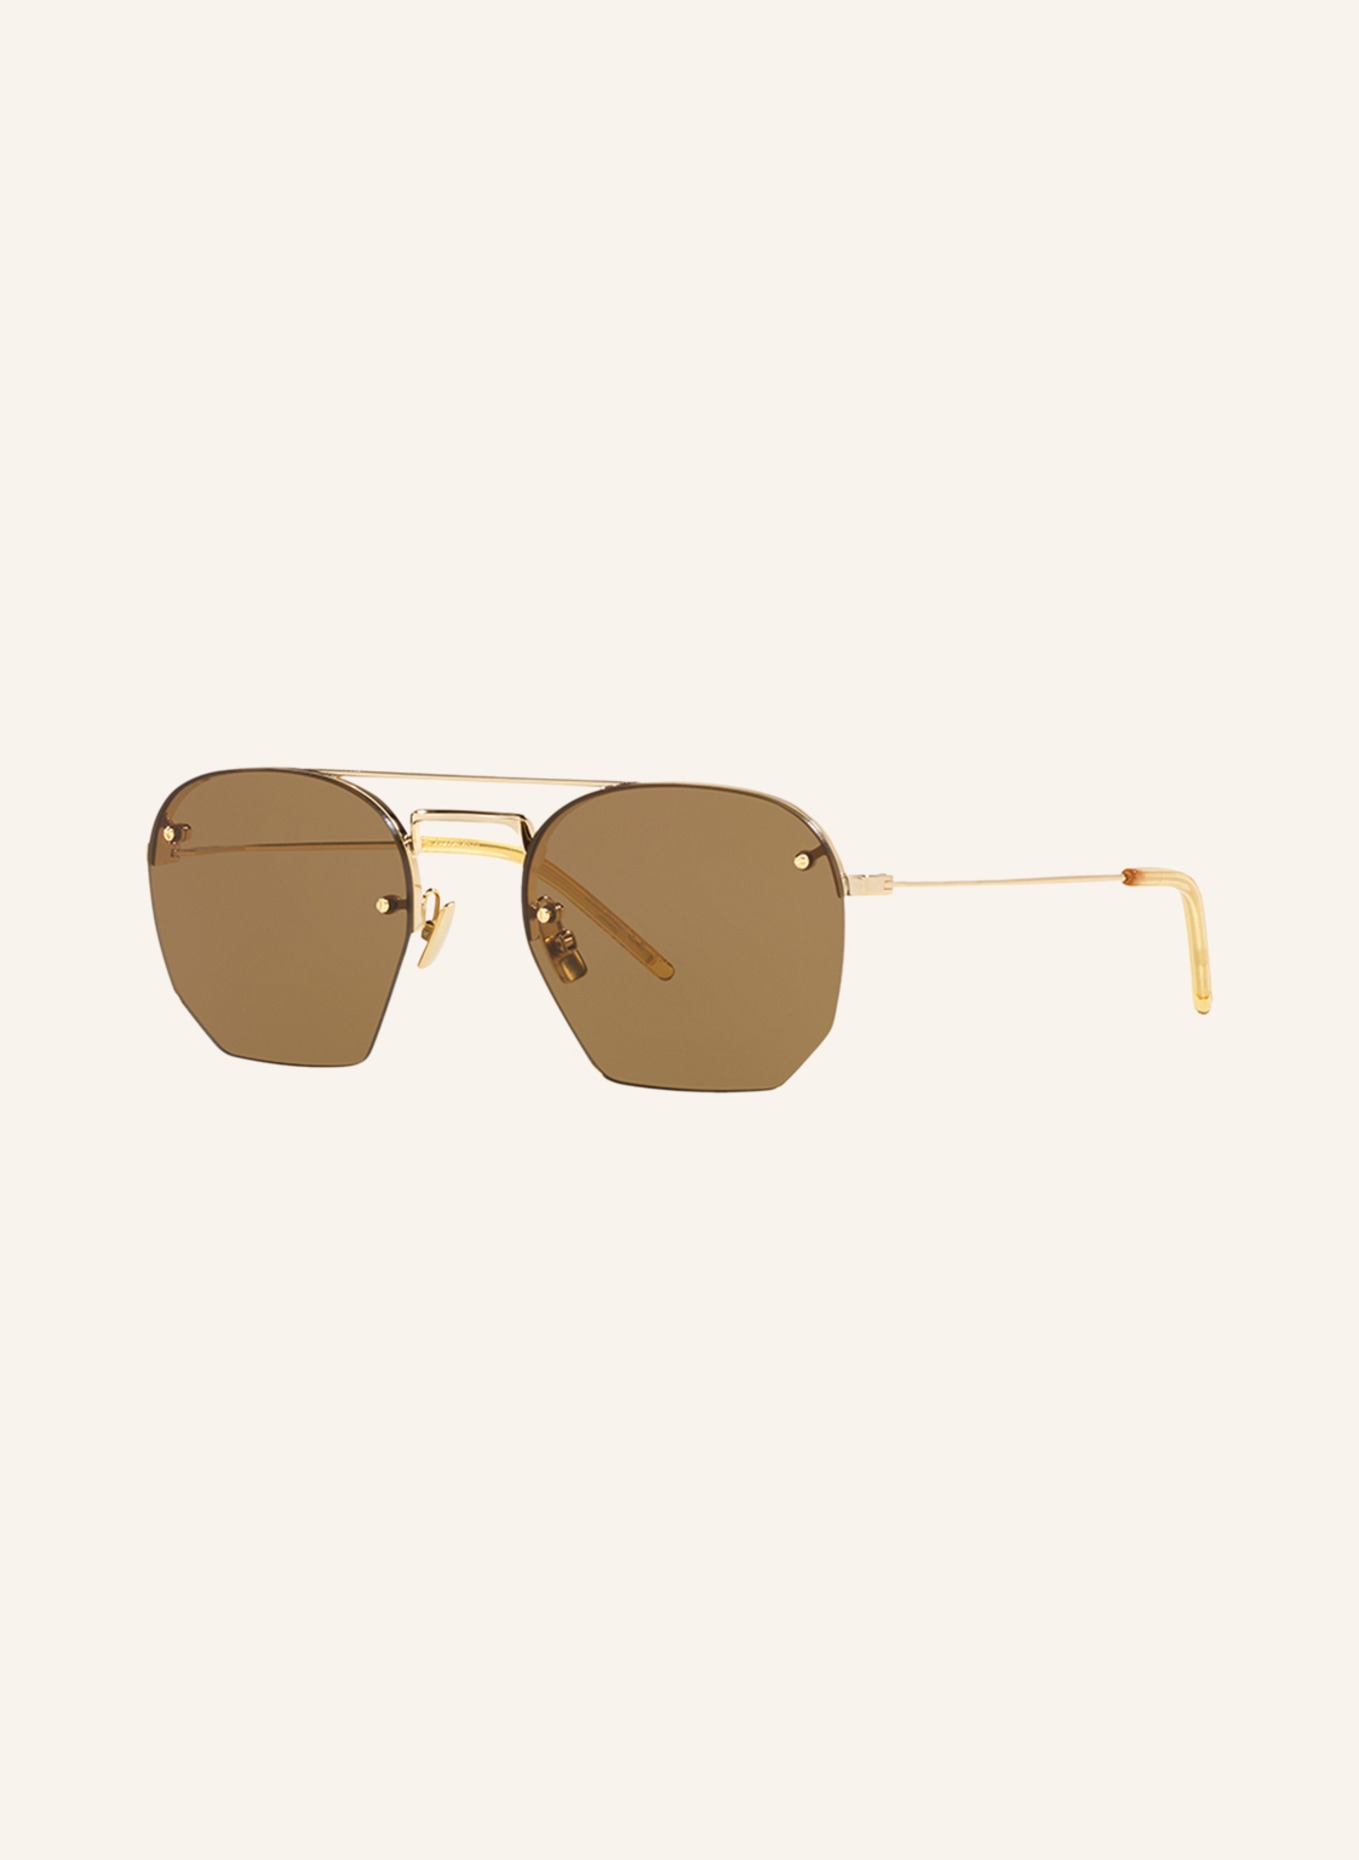 SAINT LAURENT Sunglasses YS000274 in 2310d1 - gold/brown